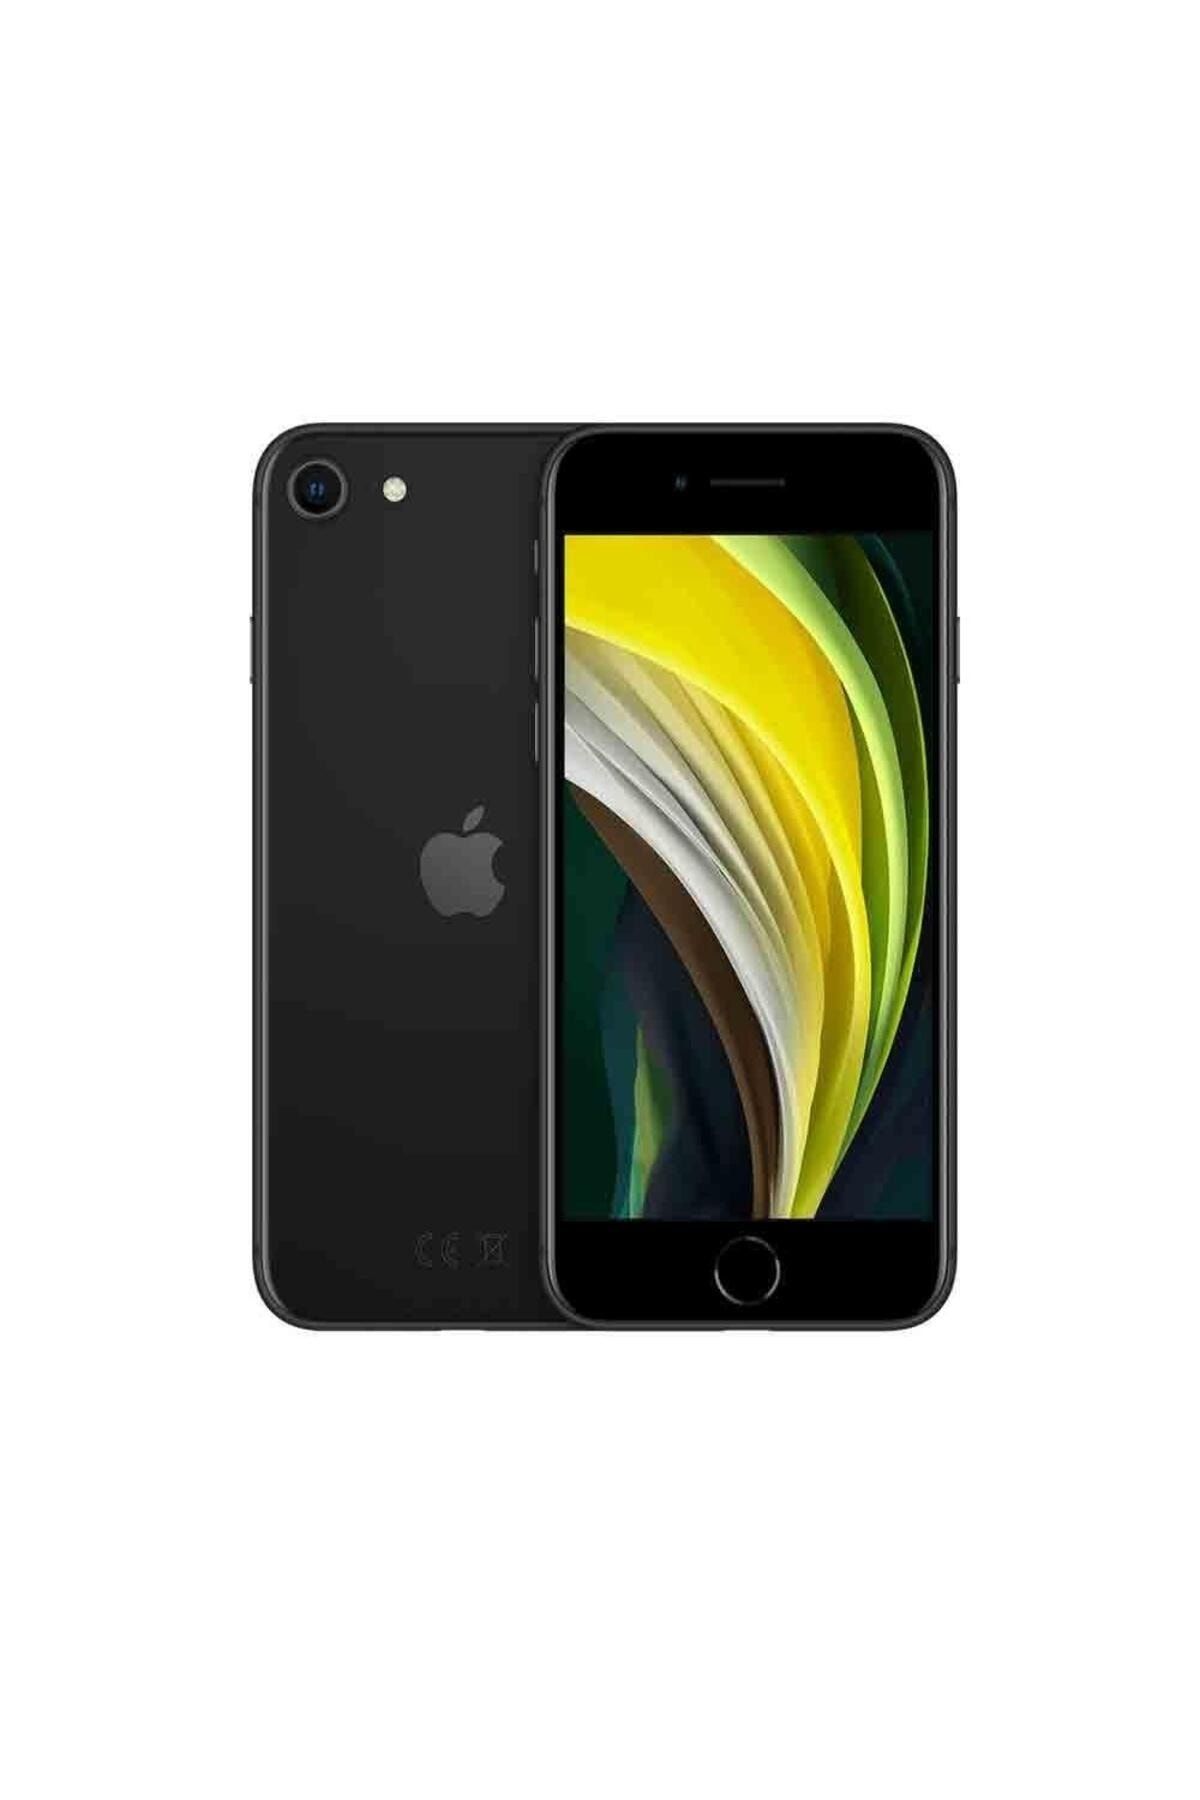 Apple Yenilenmiş iPhone Se 2020 64 GB Siyah Cep Telefonu (12 Ay Delta Servis Garantili) - B Kalite